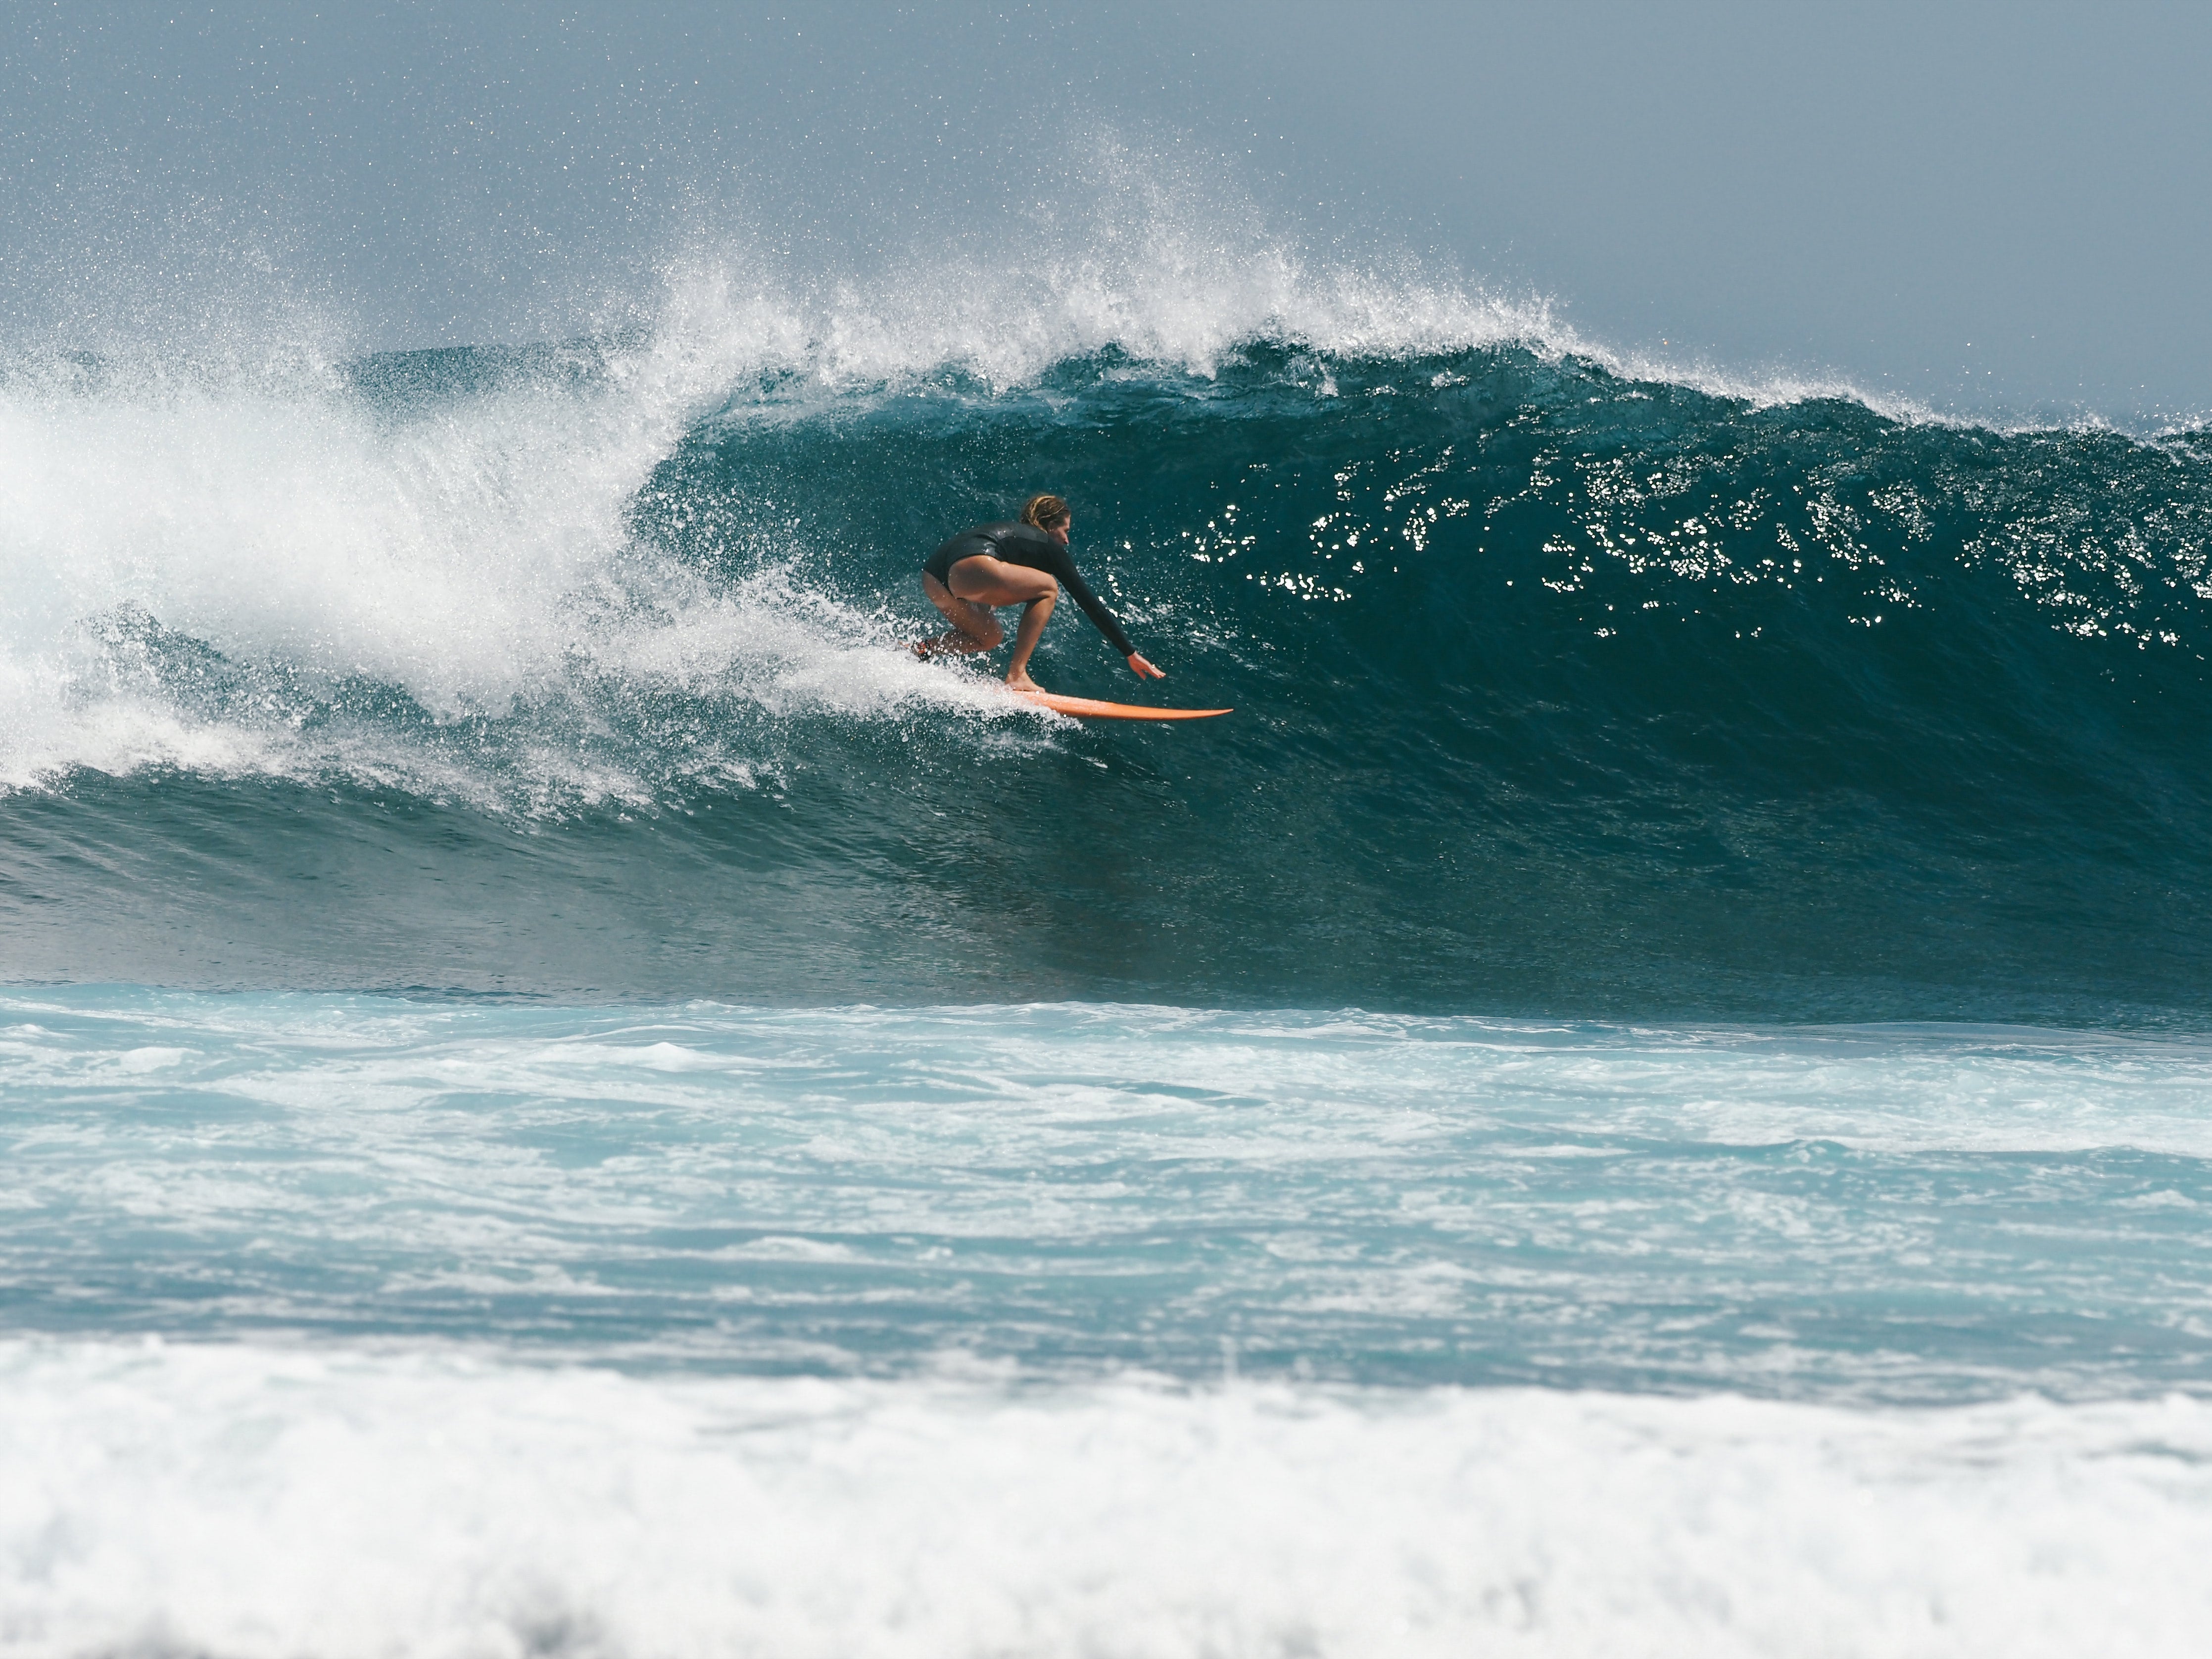 Cait surfing a wave entering the barrel